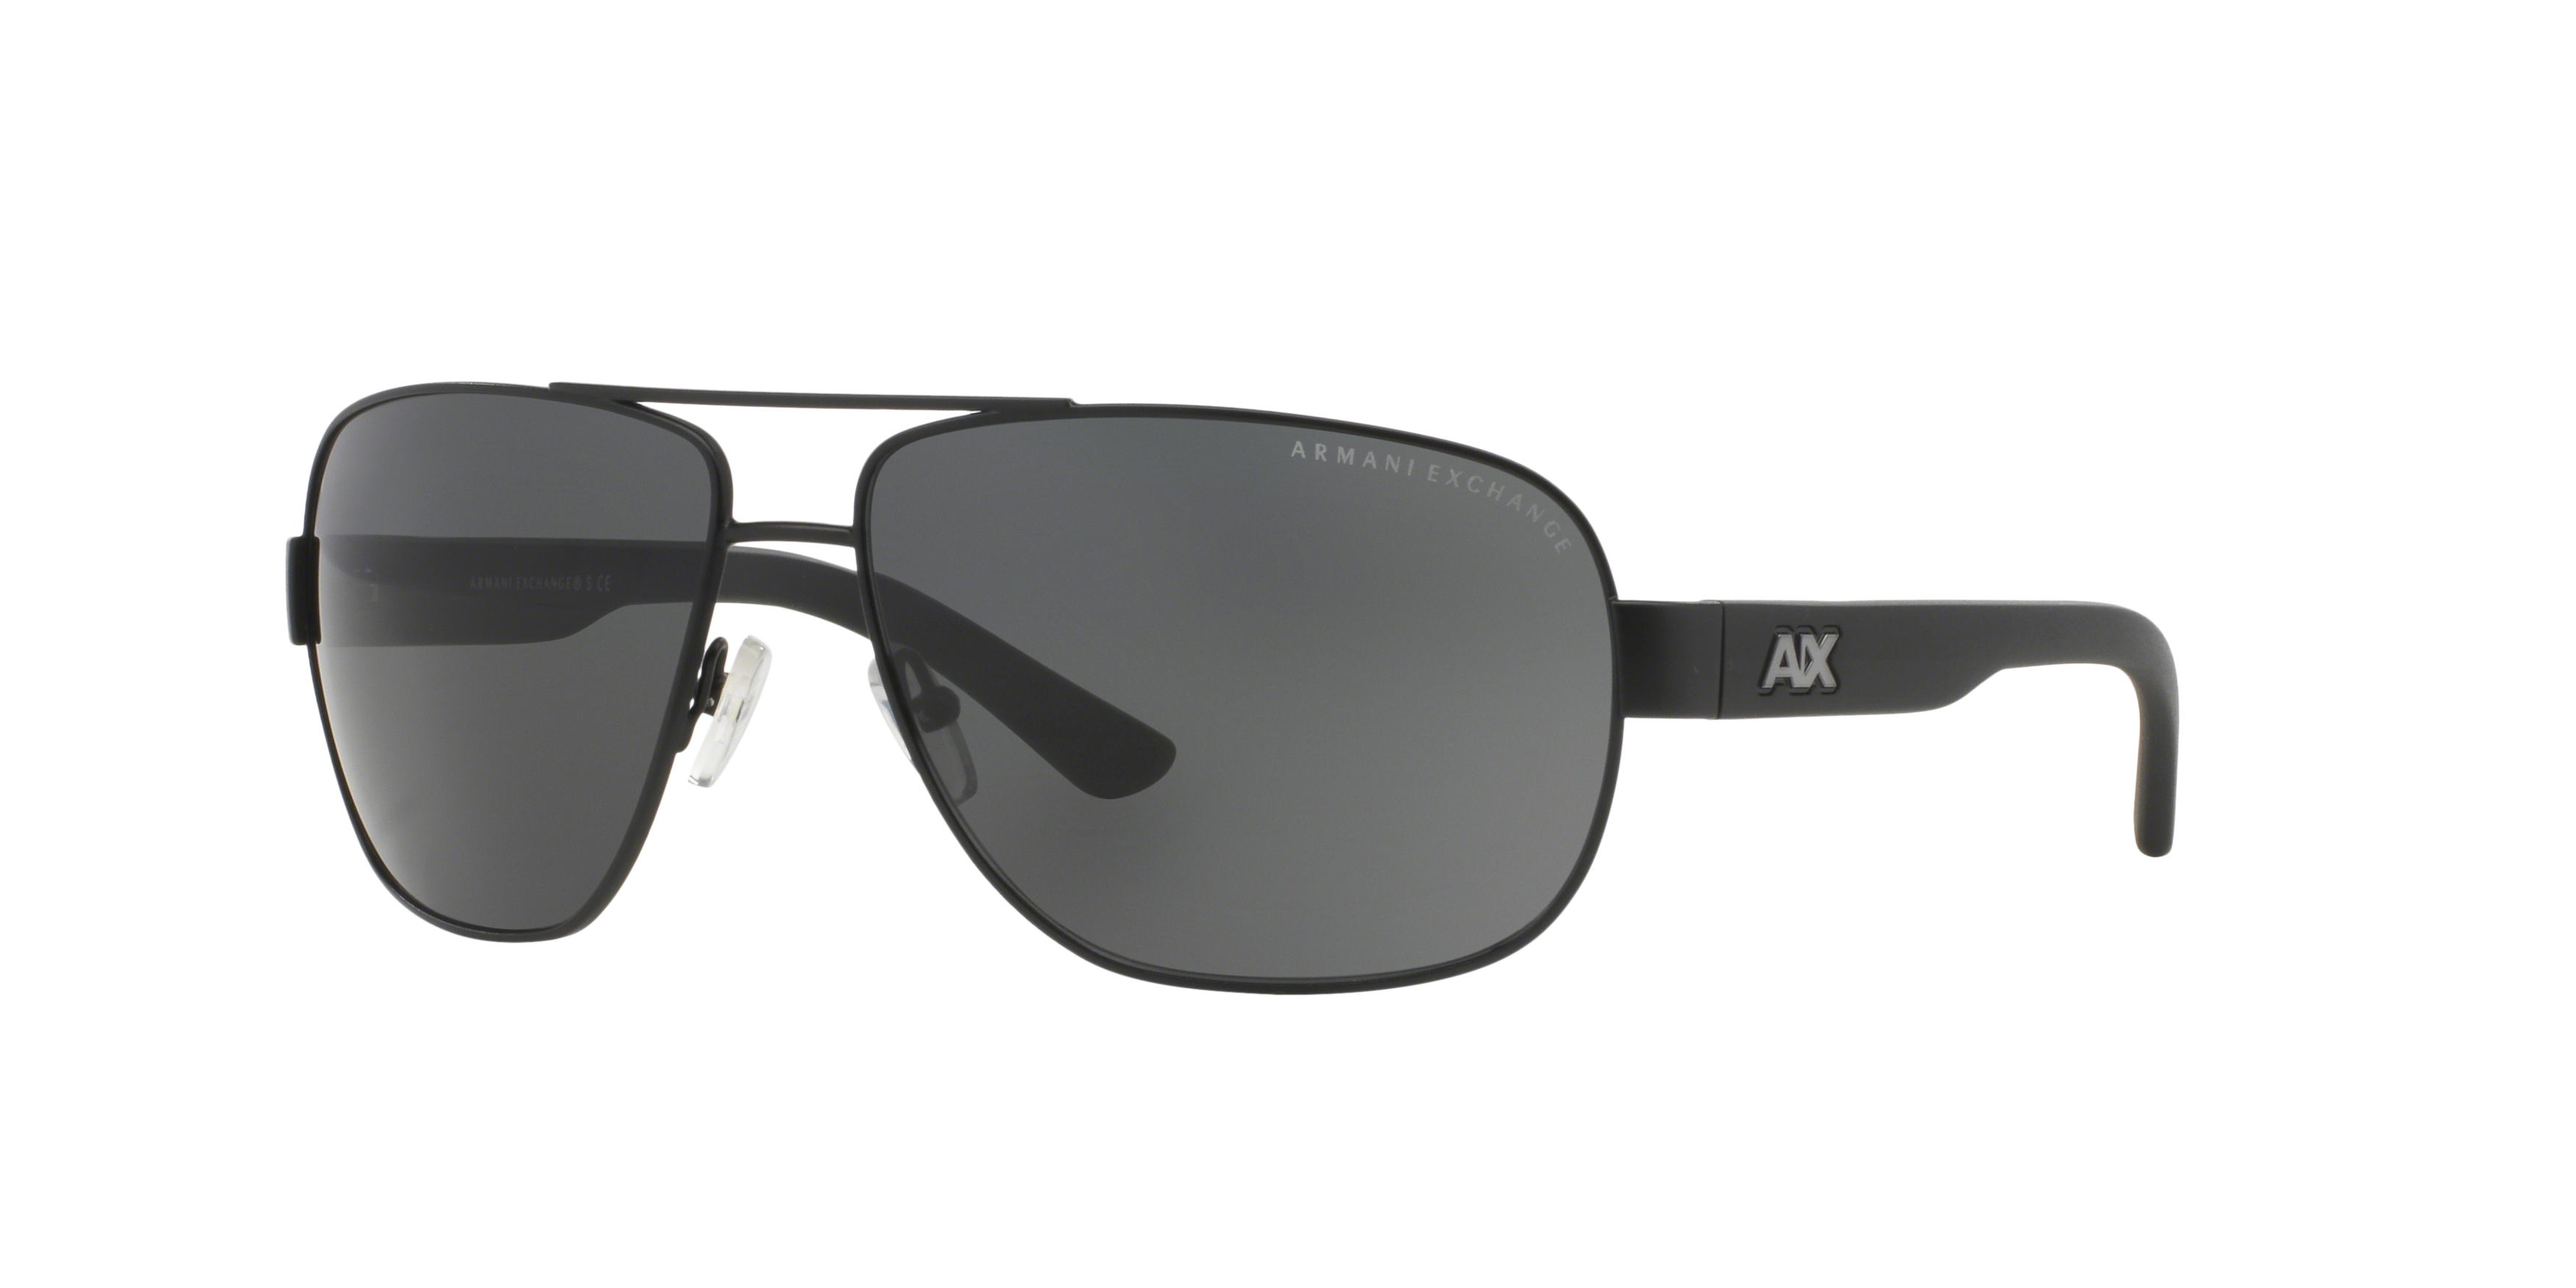 Angle_Left01 Armani Exchange AX 2012S Sunglasses Grey / Black